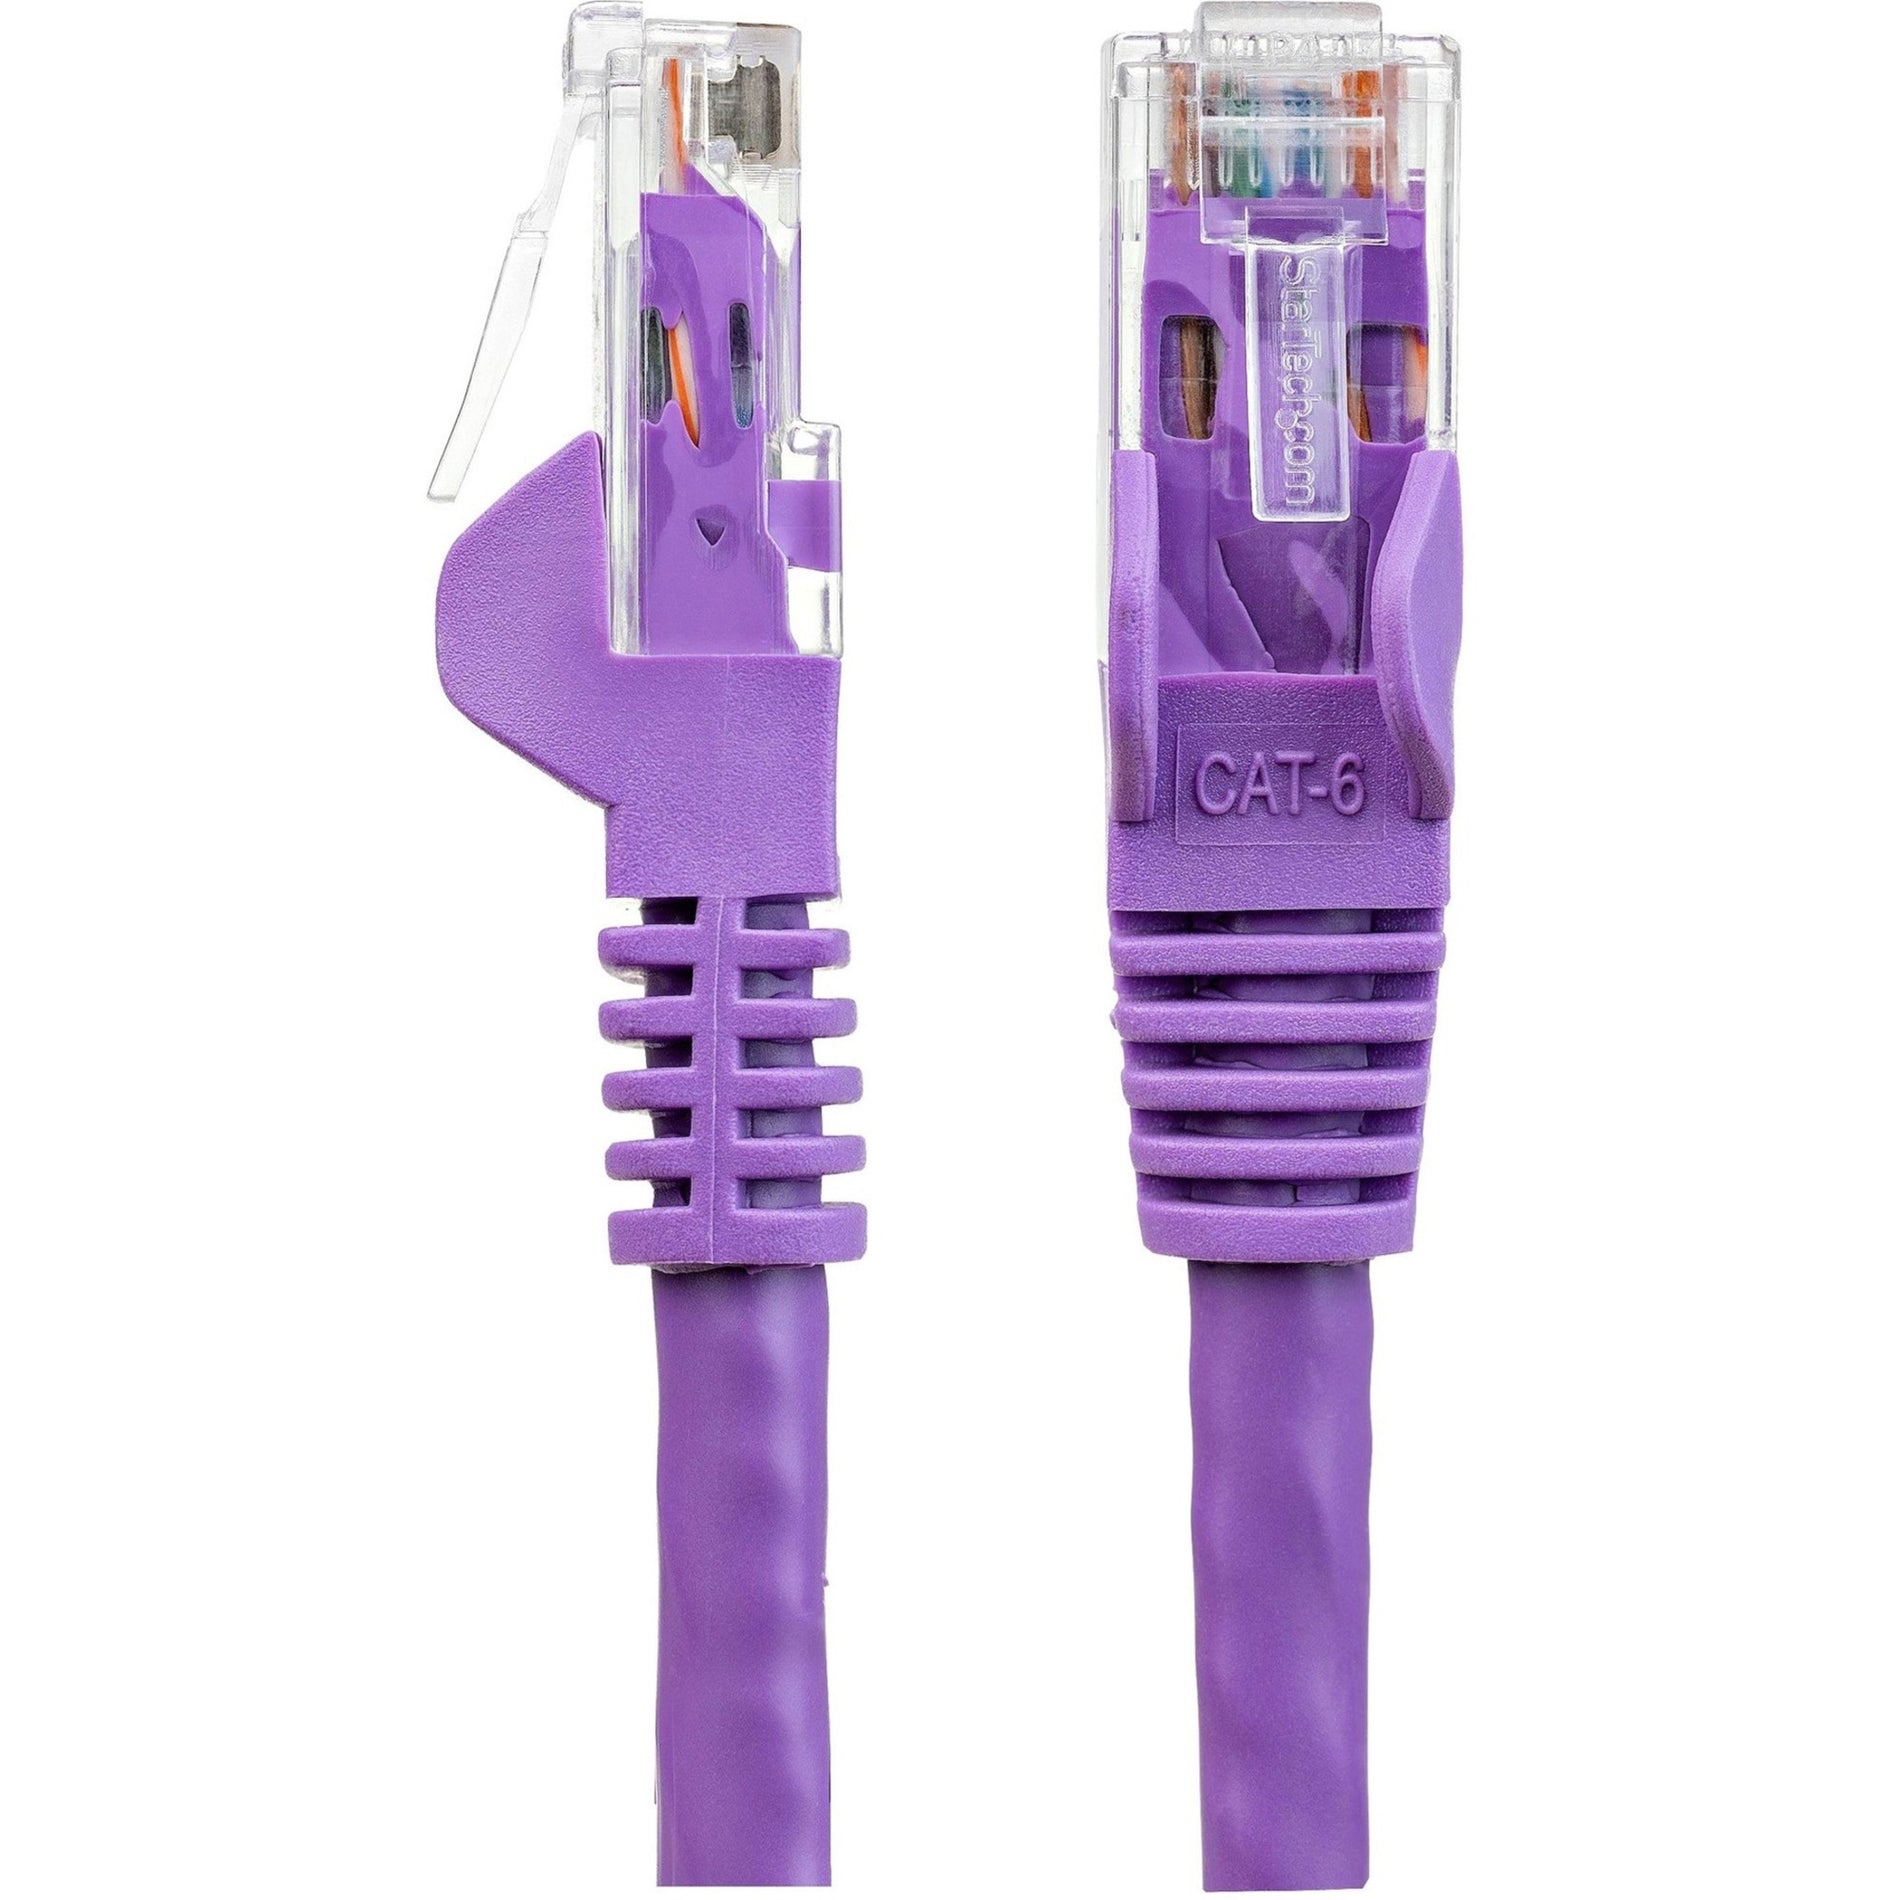 StarTech.com N6PATCH9PL Cat6 Cable with Snagless RJ45 Connectors - 9ft UTP Cat 6 Patch Cable, Purple